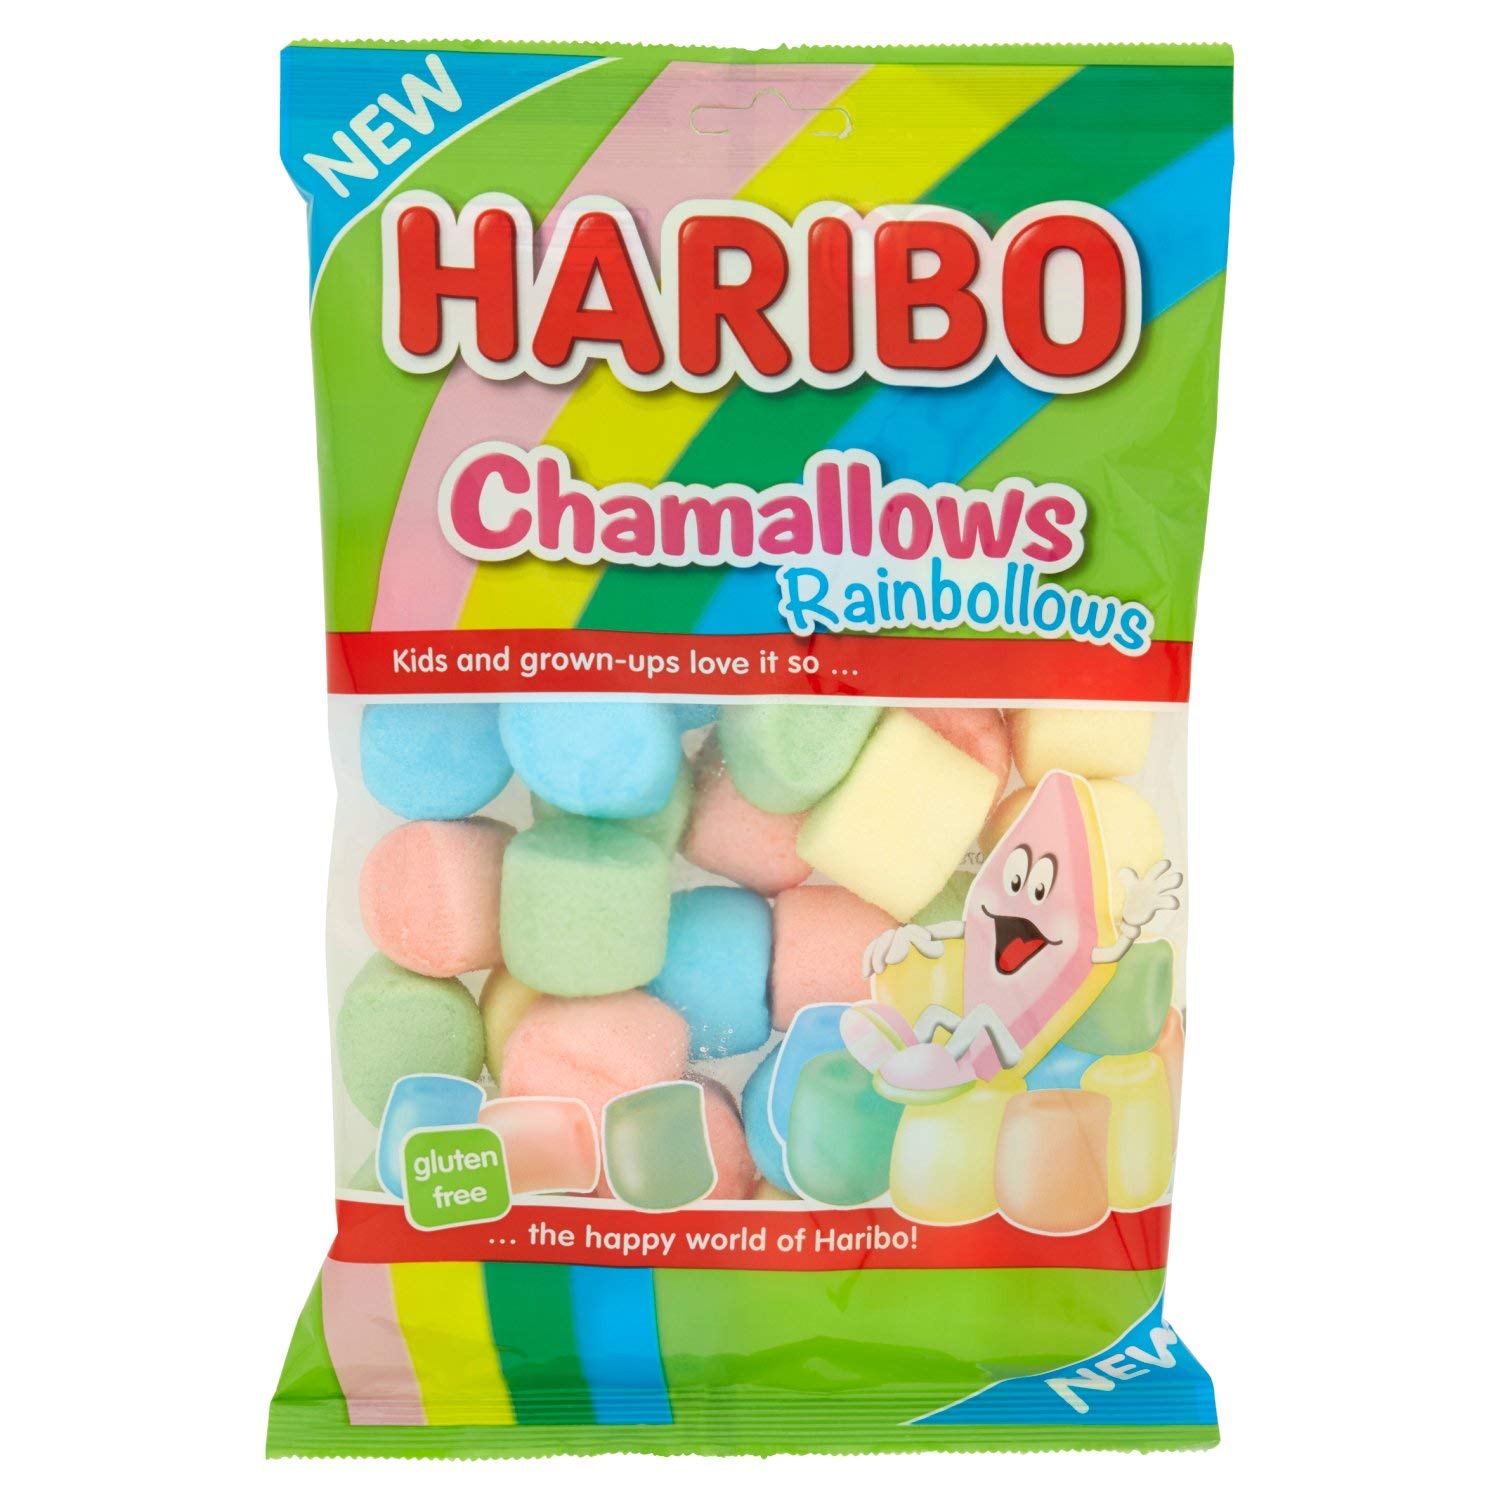 Haribo Chamallows Rainbollows - 175g